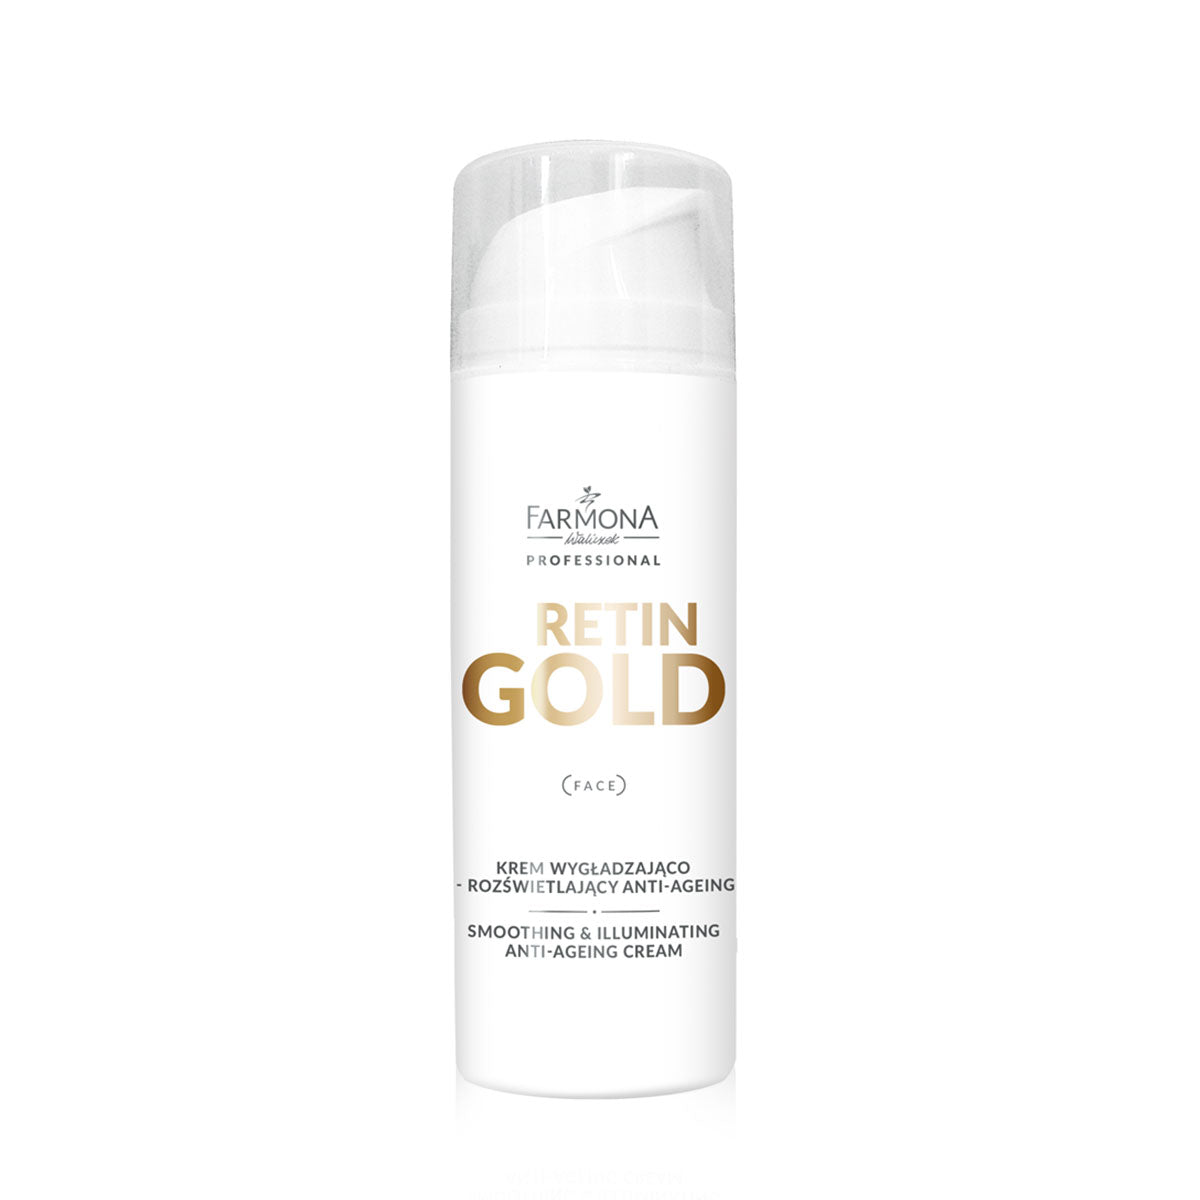 Retin Gold Smoothing & Illuminating Anti-Ageing Cream 150ml